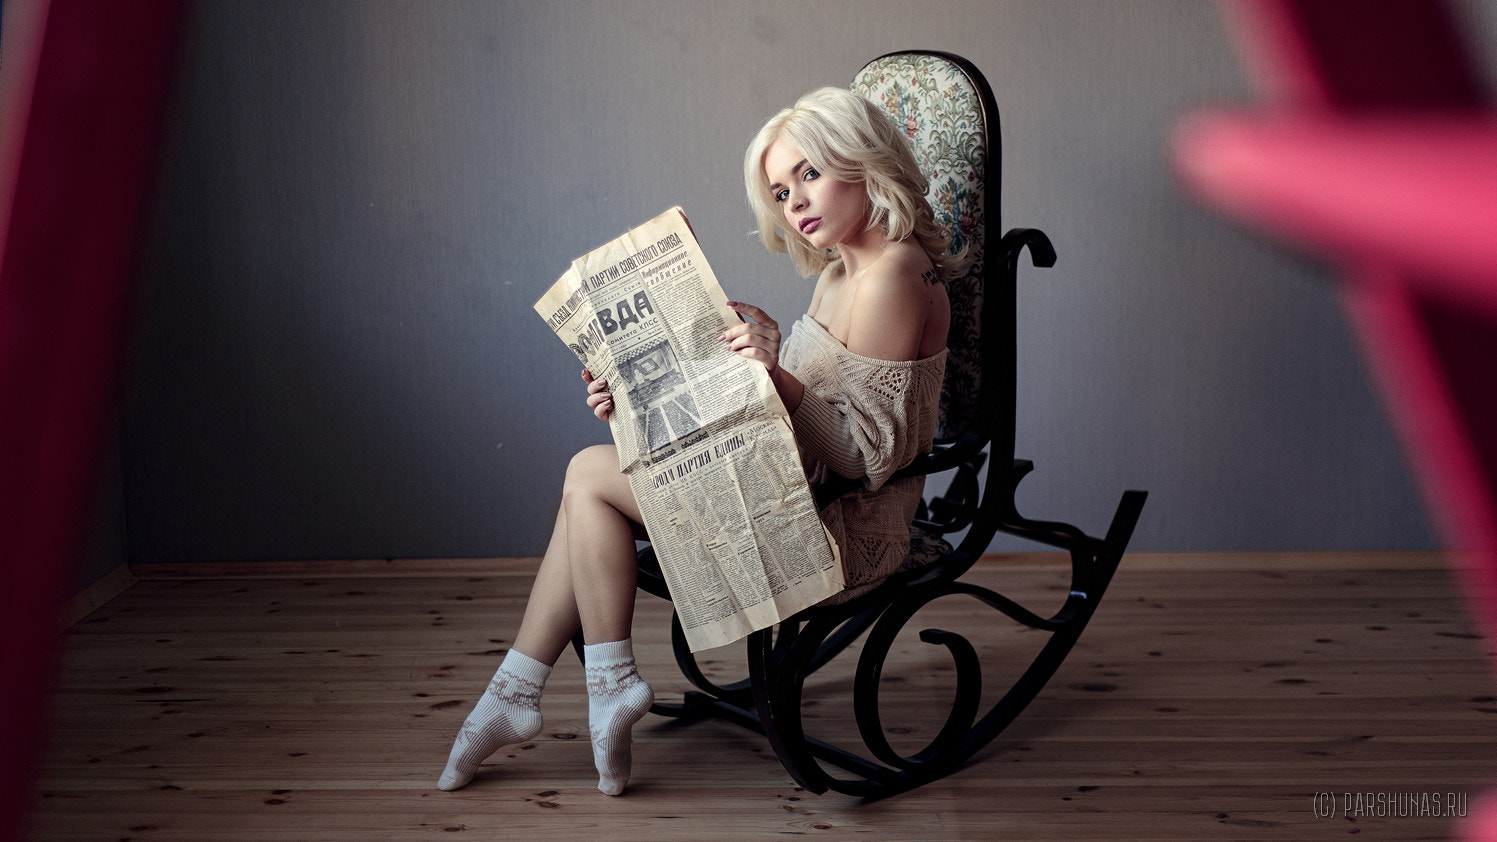 People 1497x842 women blonde bare shoulders socks newspapers no bra sweater Kristina Mamatyukova Anton Parshunas reading